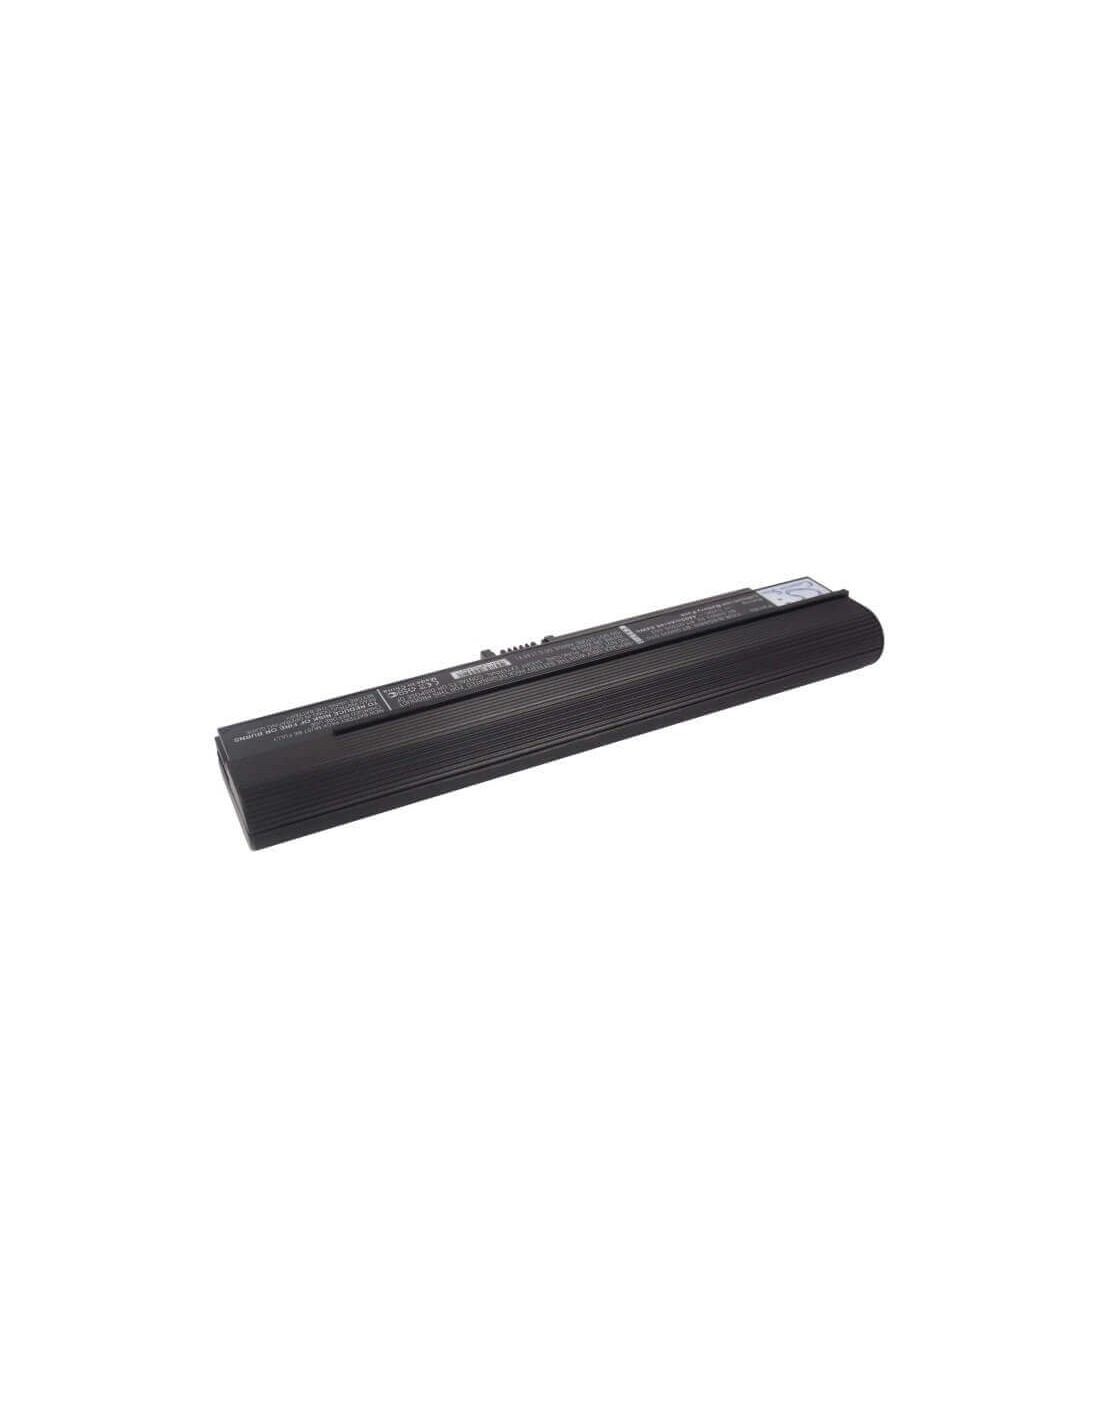 Black Battery for Acer Travelmate 3030, Ferrari 1005wlmi, Ferrari 1003wtmi 11.1V, 4400mAh - 48.84Wh